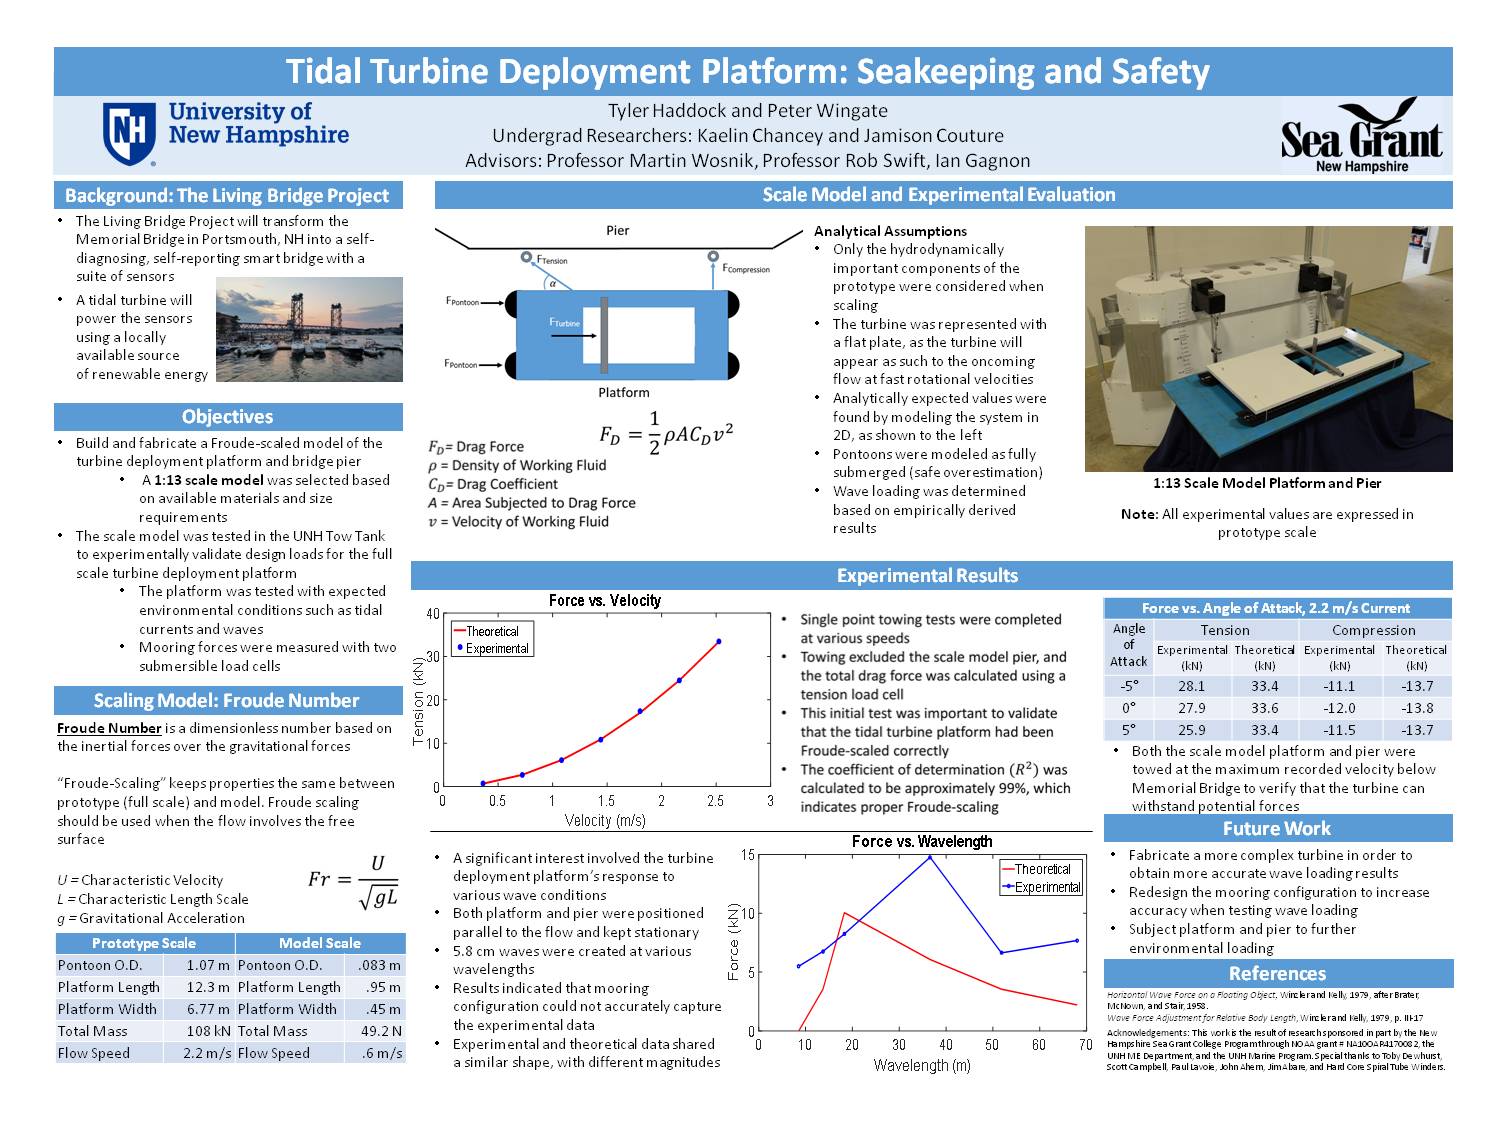 Tidal Turbine Deployment Platform: Seakeeping And Safety by tkk7